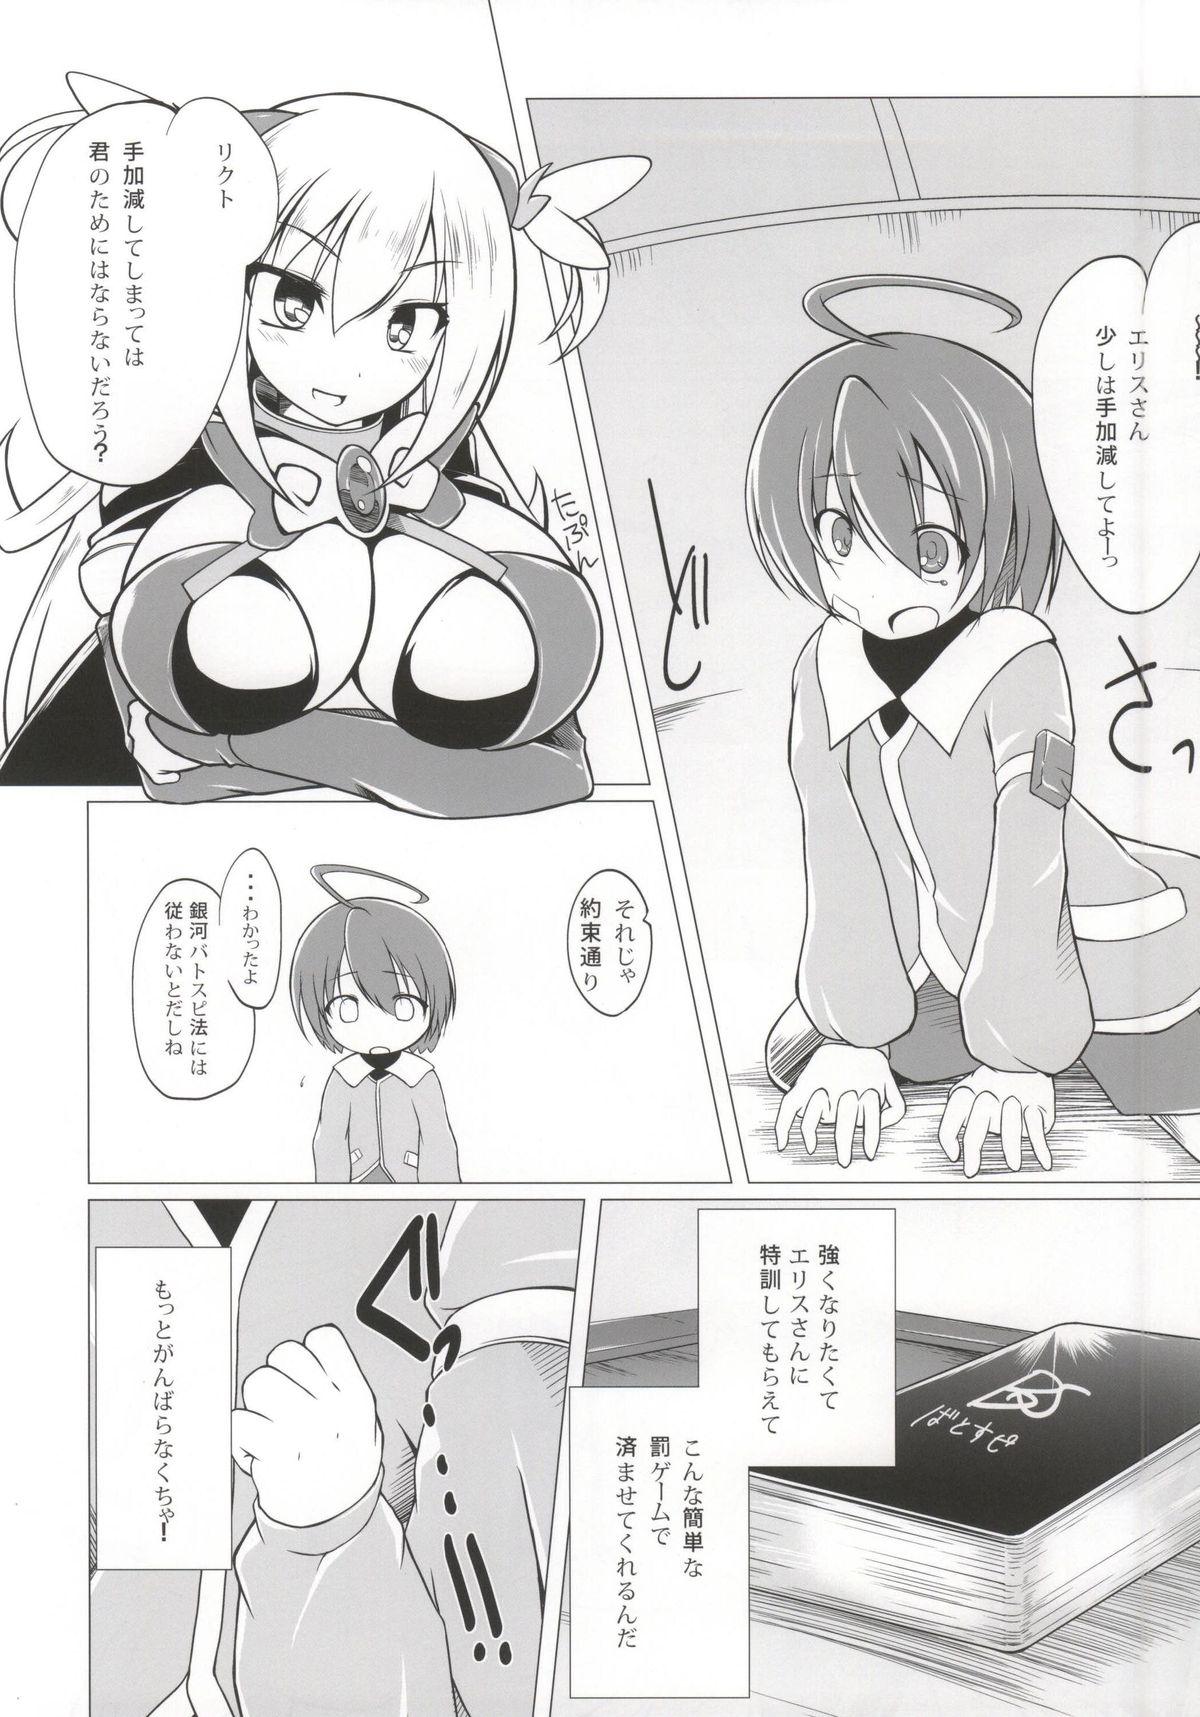 8teen Itazura na Hoshi - Battle spirits Camsex - Page 3